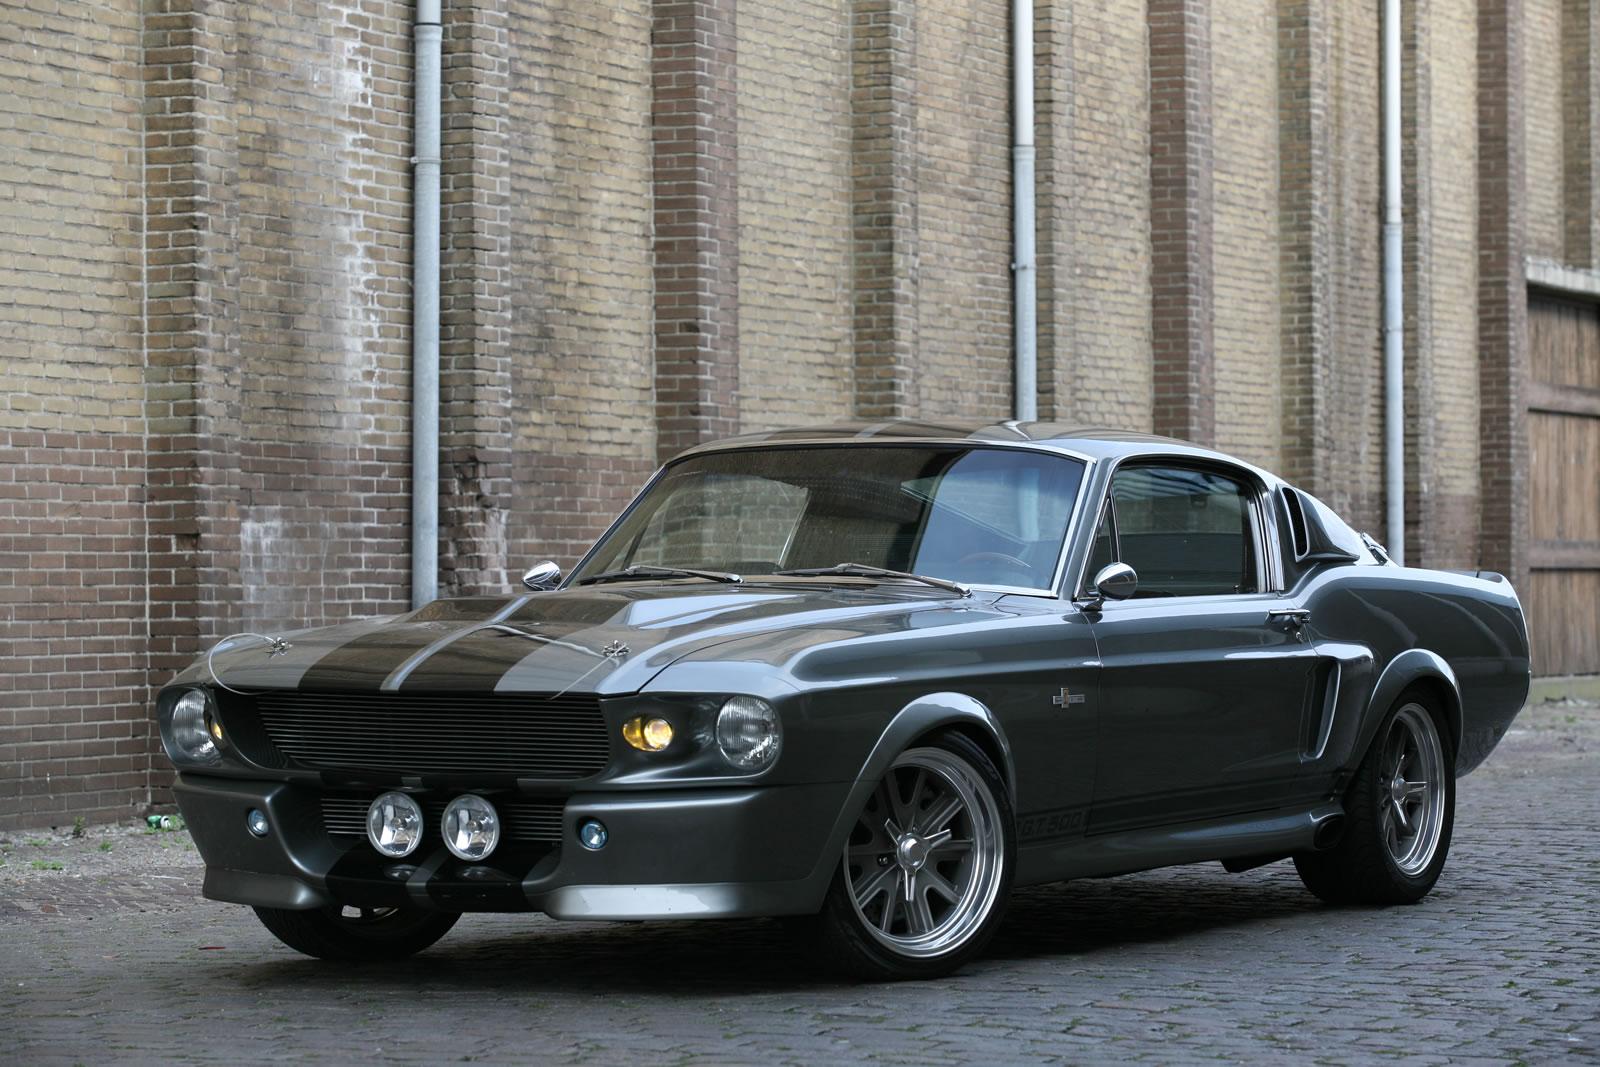 Mustang Shelby Gt500 Eleanor Dark Cars Wallpaper